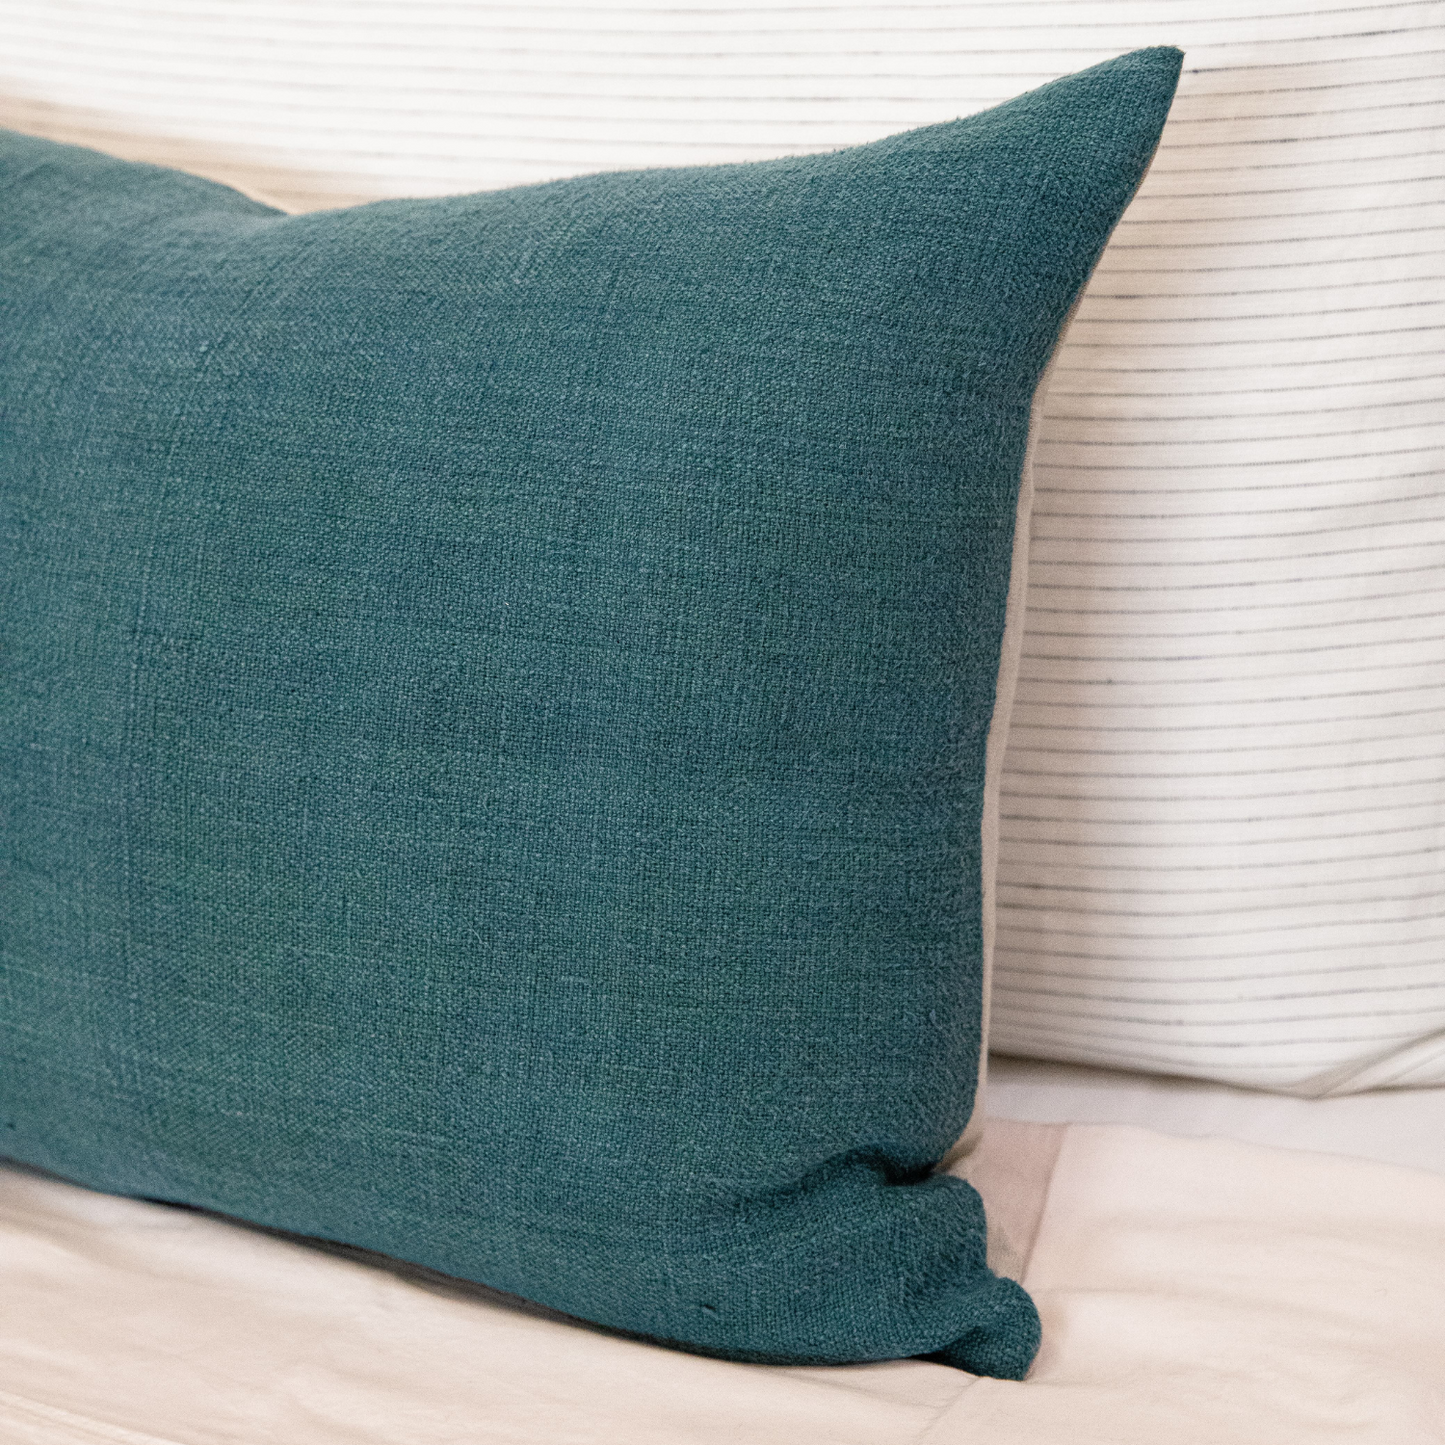 Teal Linen Vintage Pillow